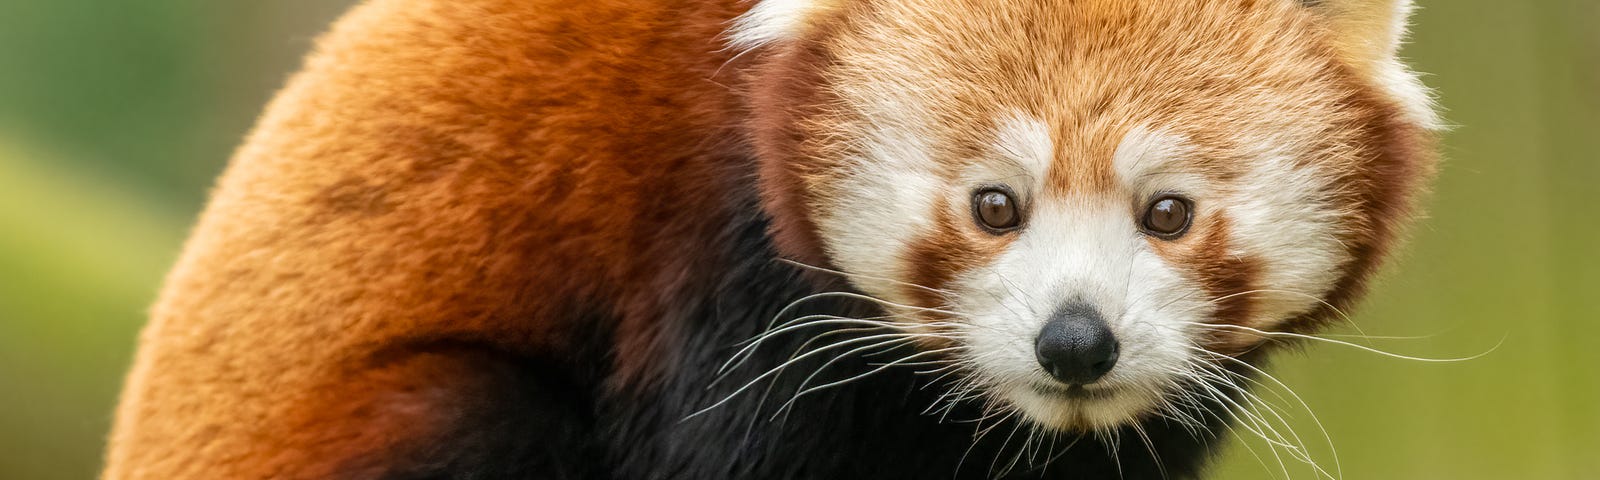 cute red panda sitting